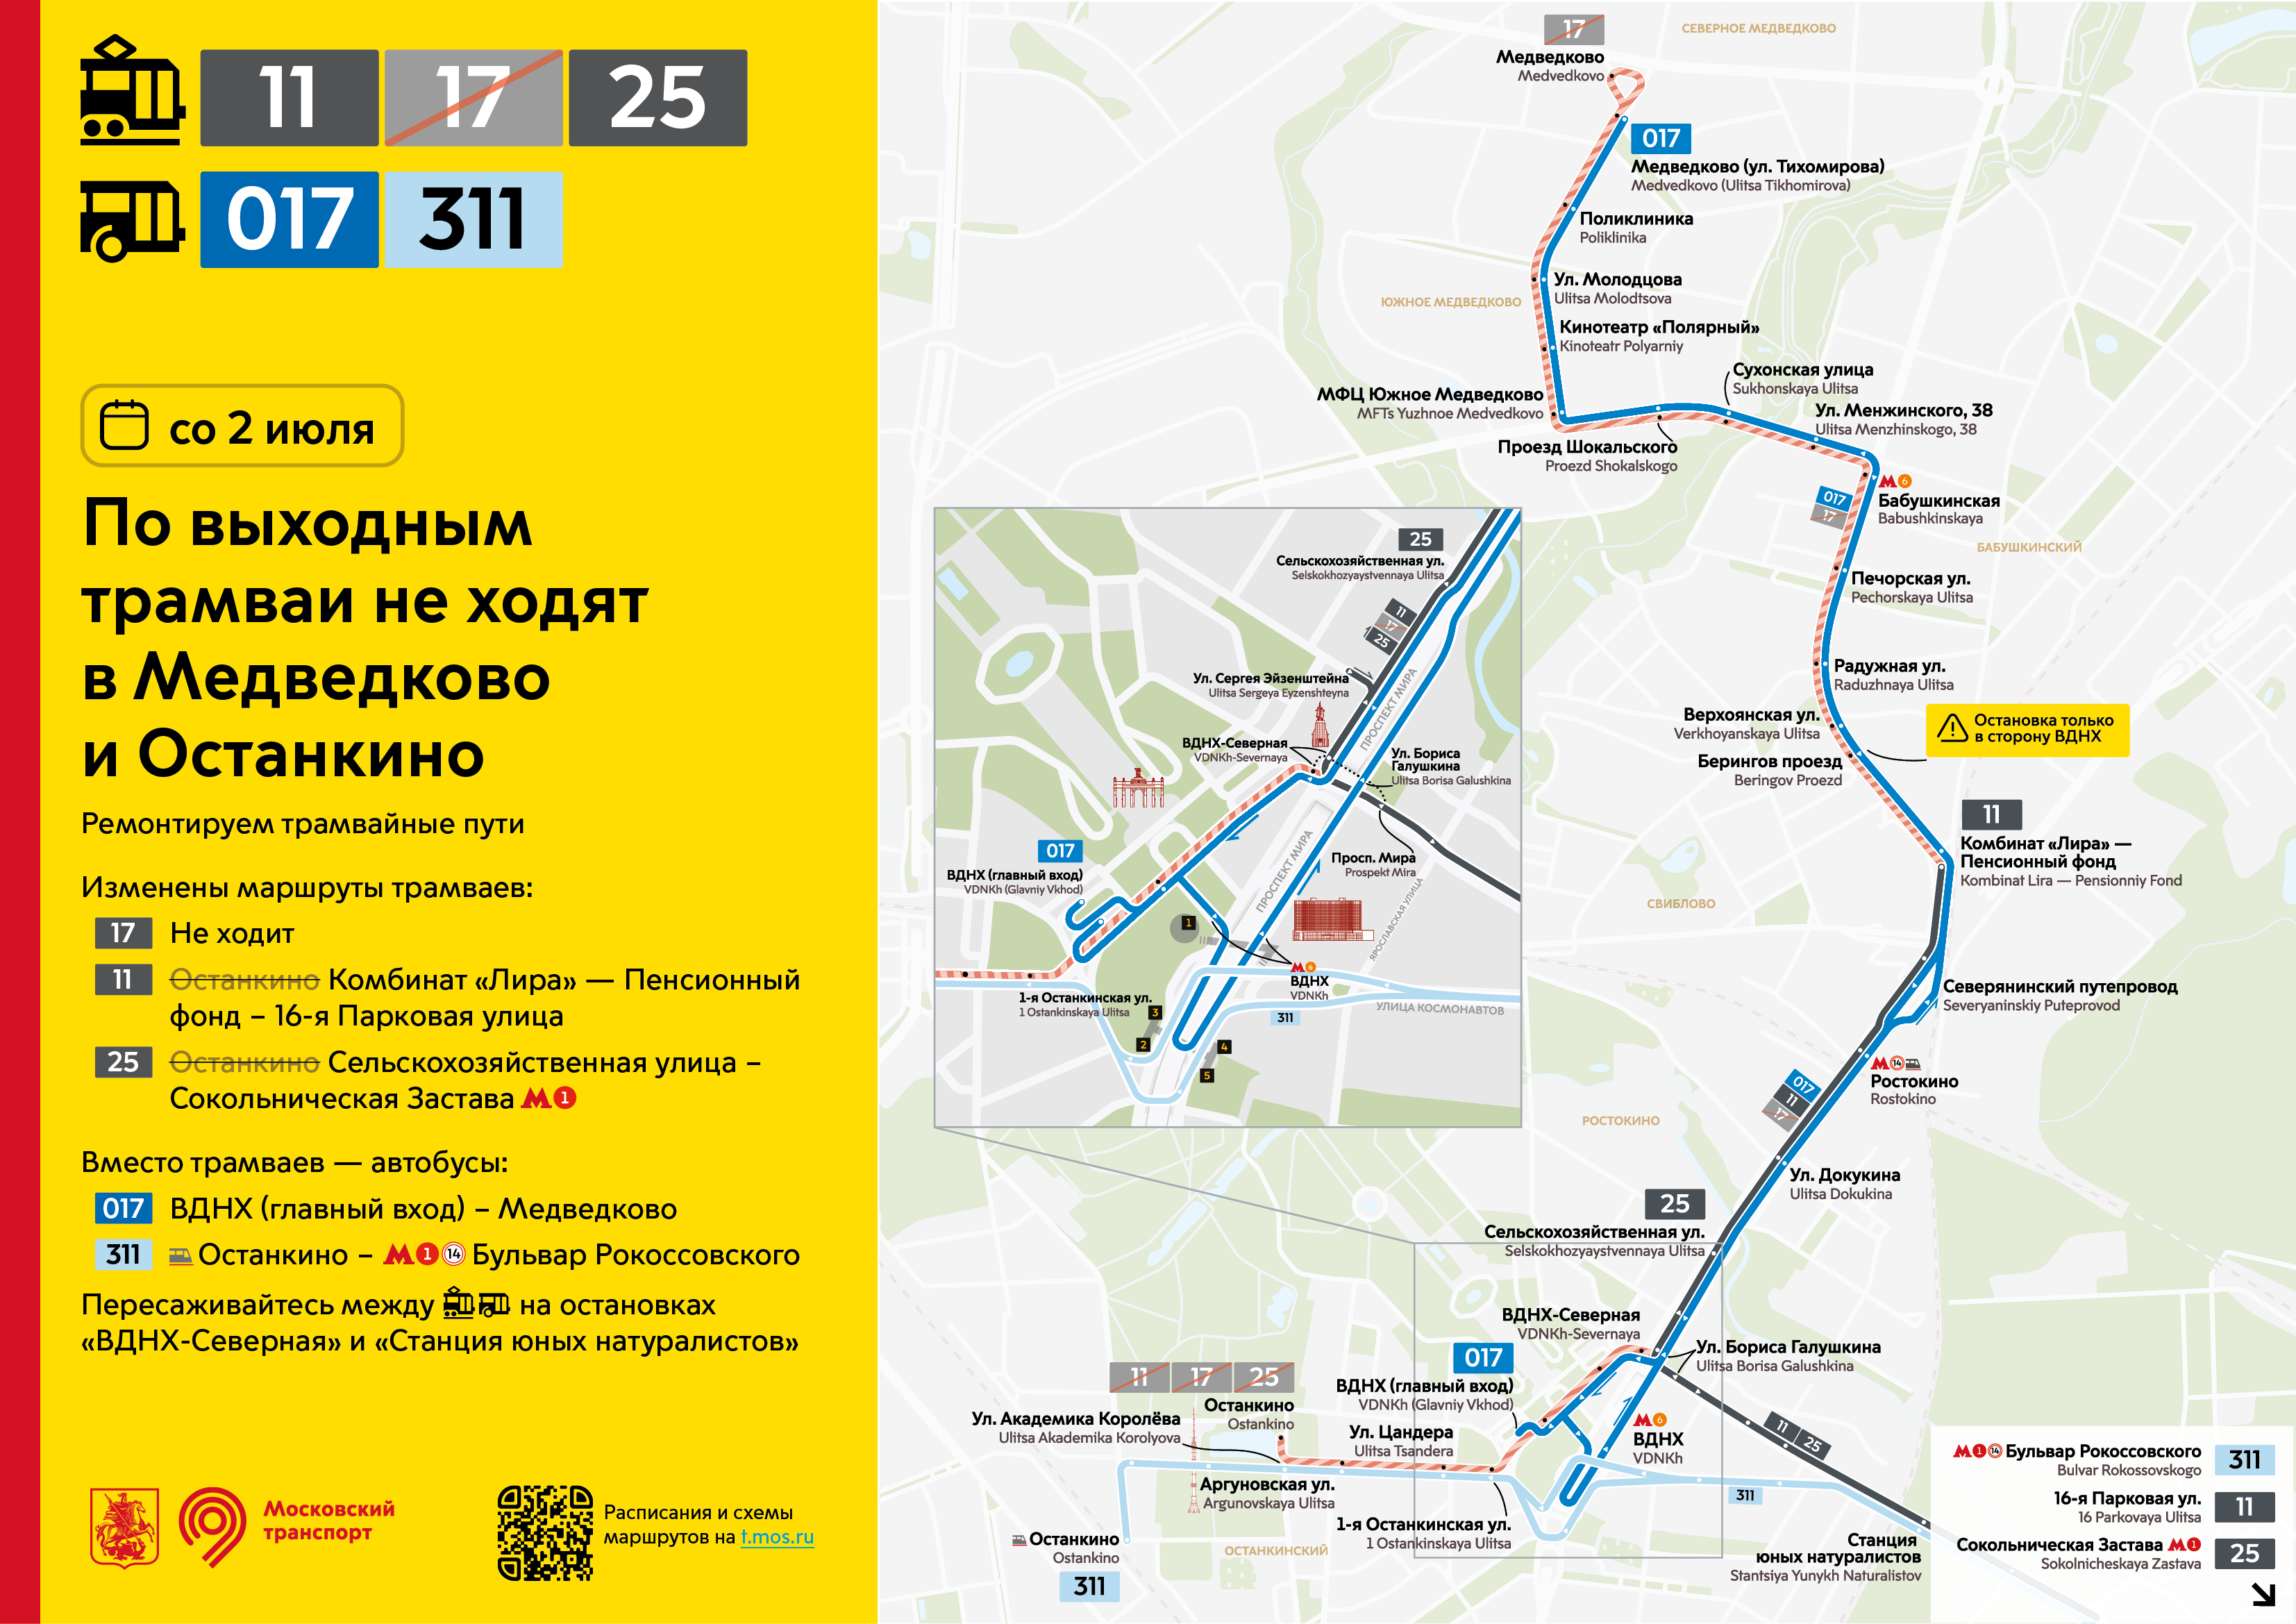 Расписание 11 трамвая пермь сегодня. Движение трамвая. Трамвай 17 маршрут. Схема трамвайных маршрутов Москва. Трамвай праздничный маршрут.